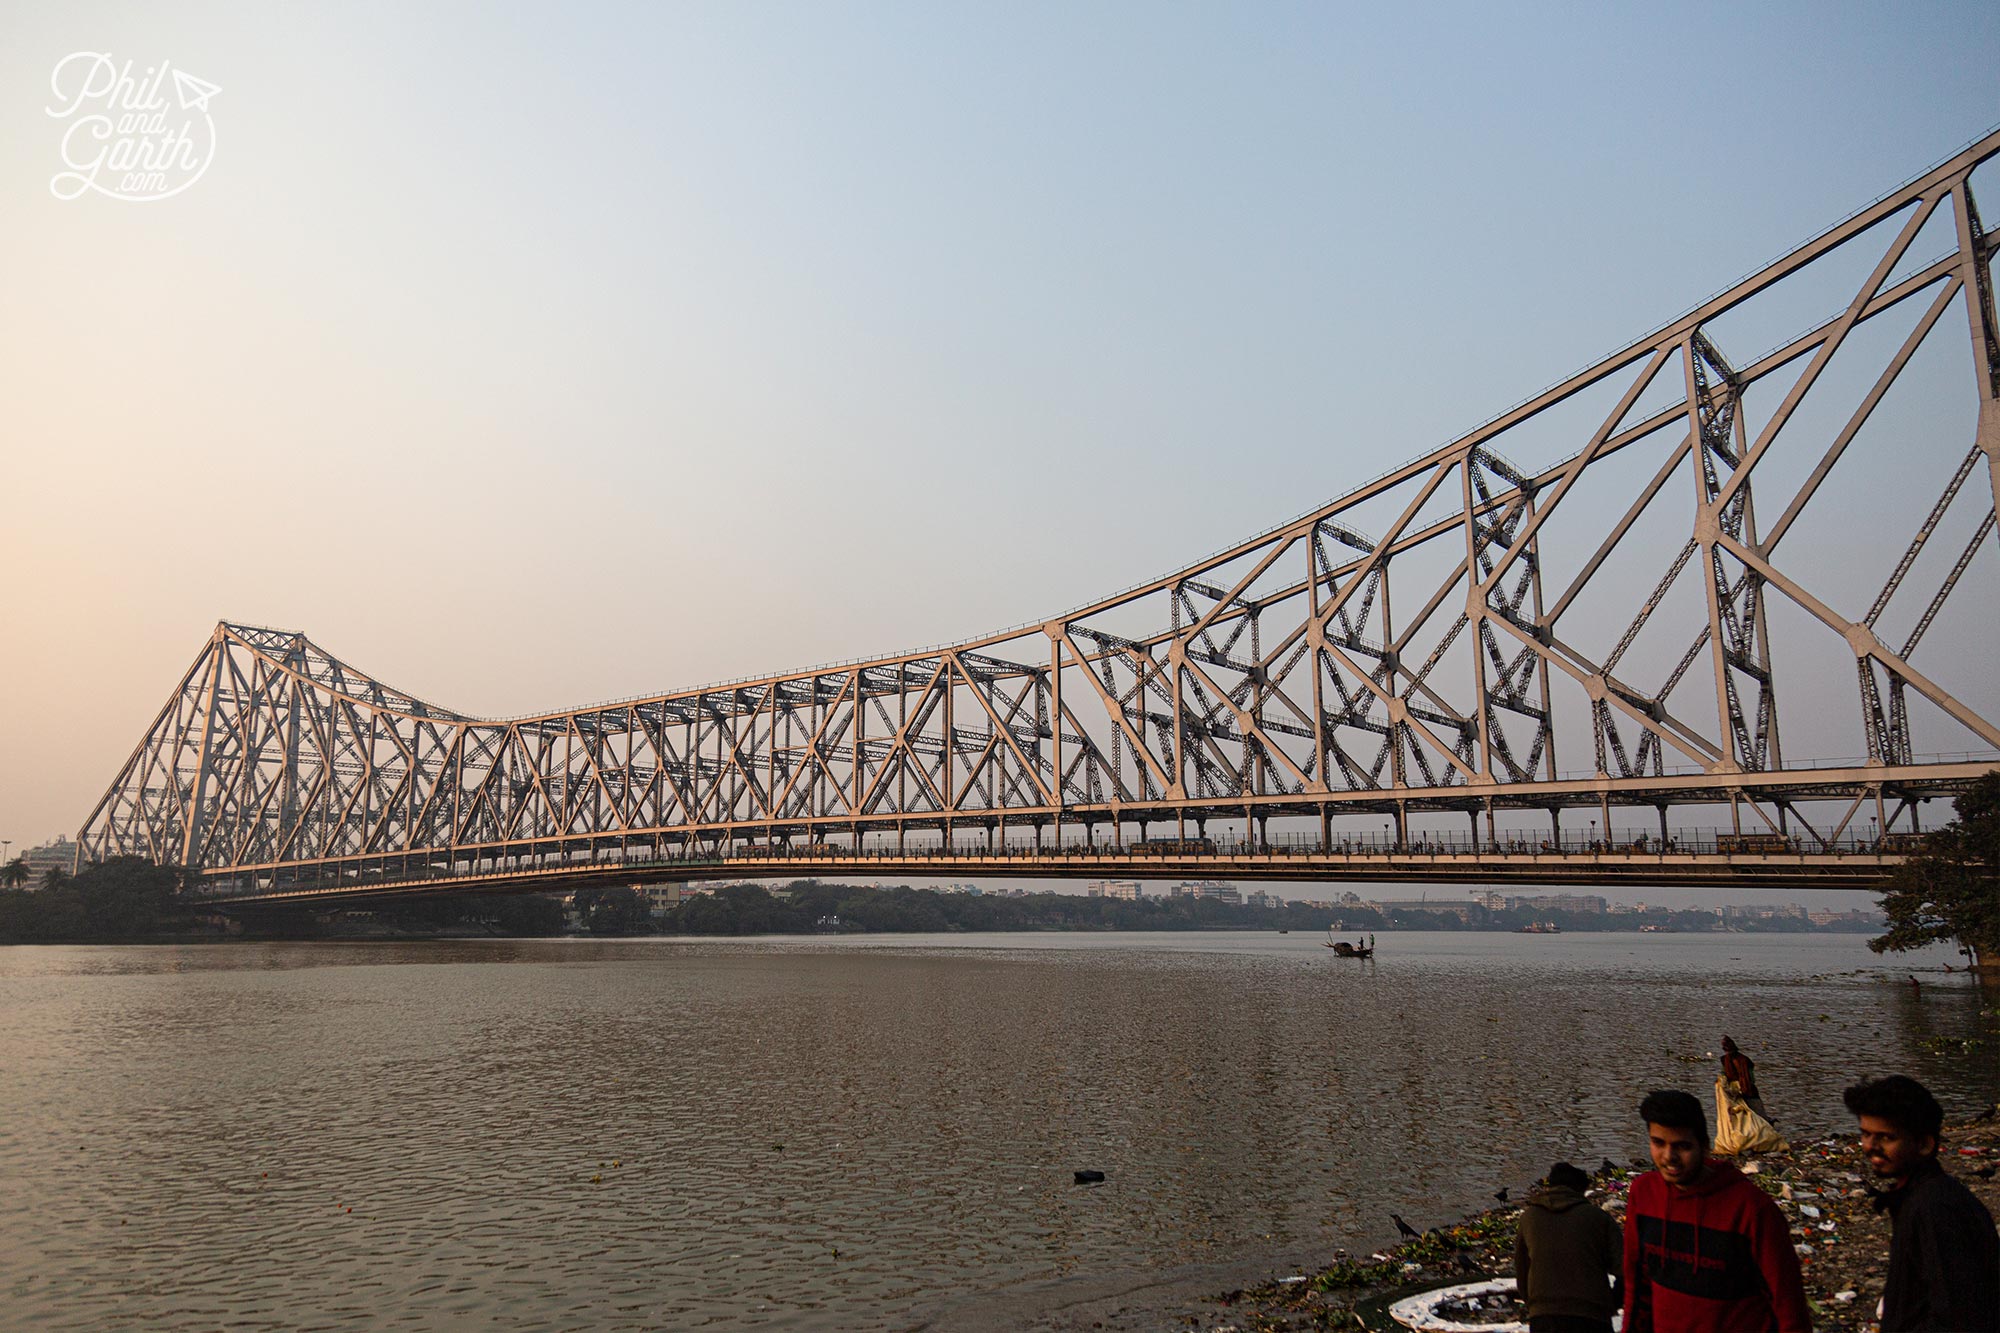 Built in 1874 the Howrah Bridge is one of the main landmark's of Kolkata